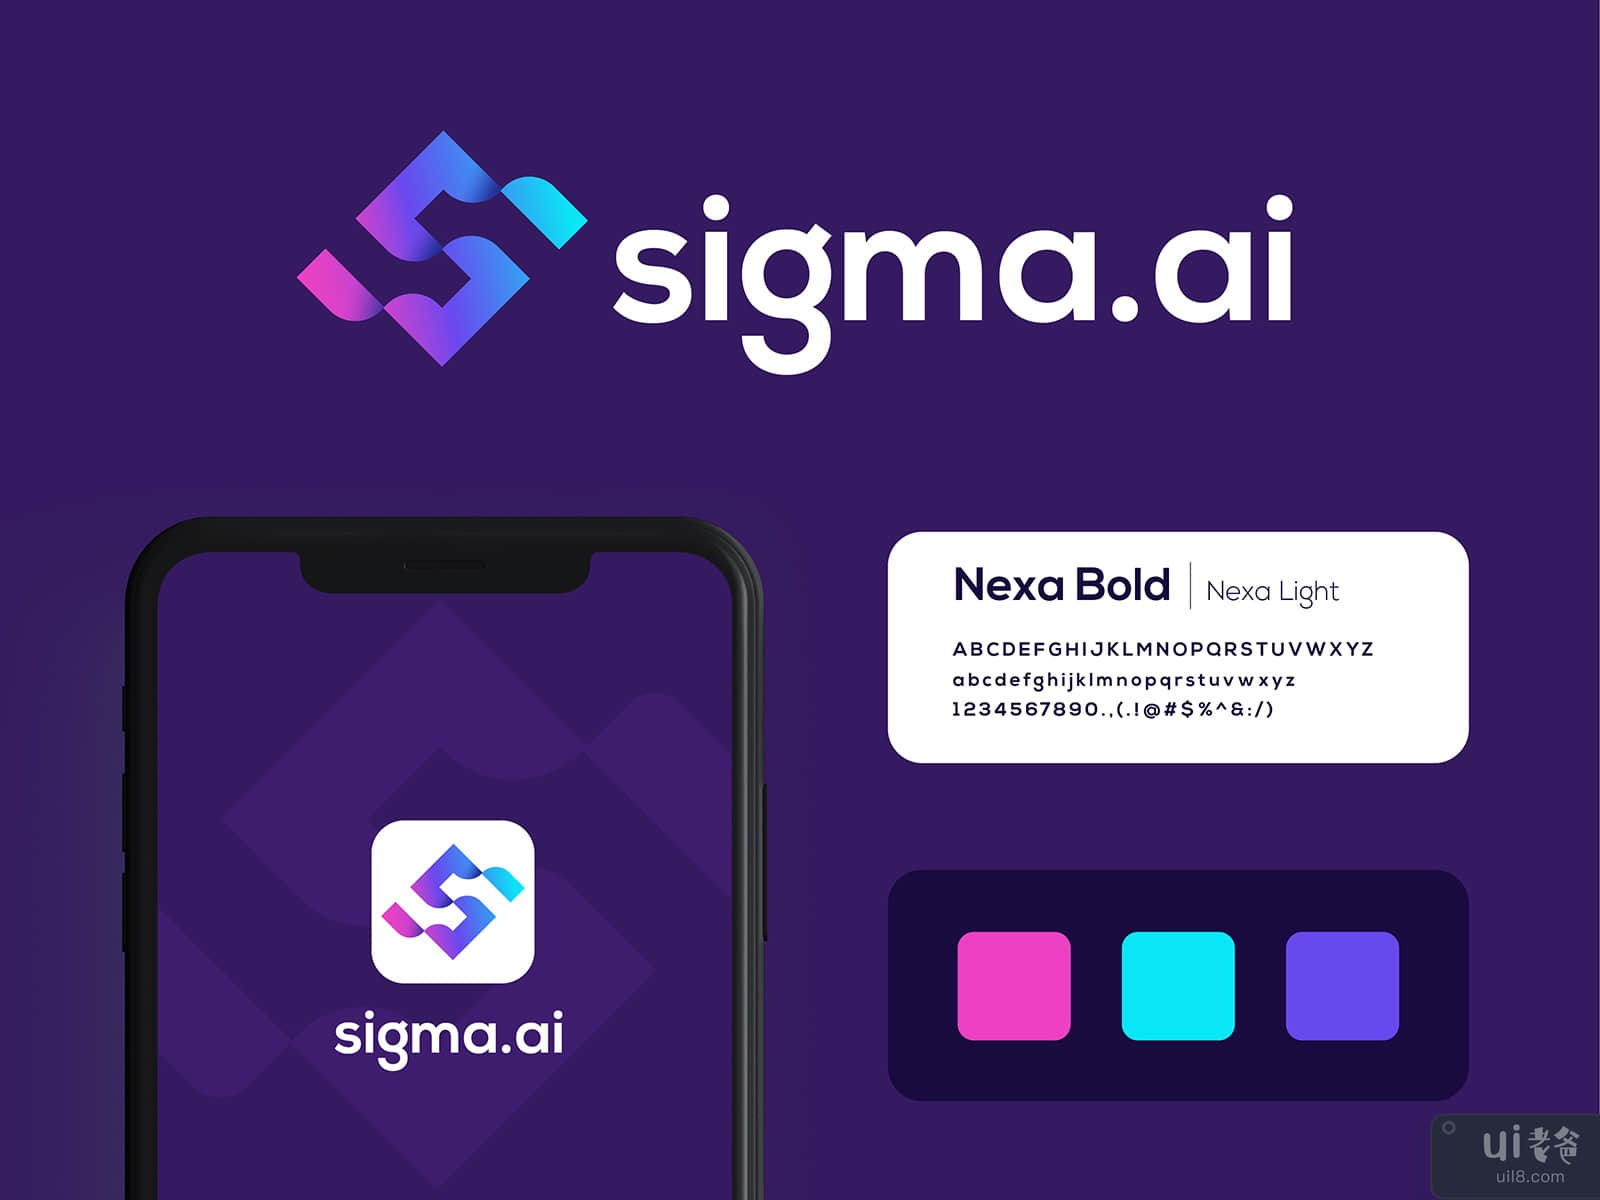 Sigma.ai-Brand Overview